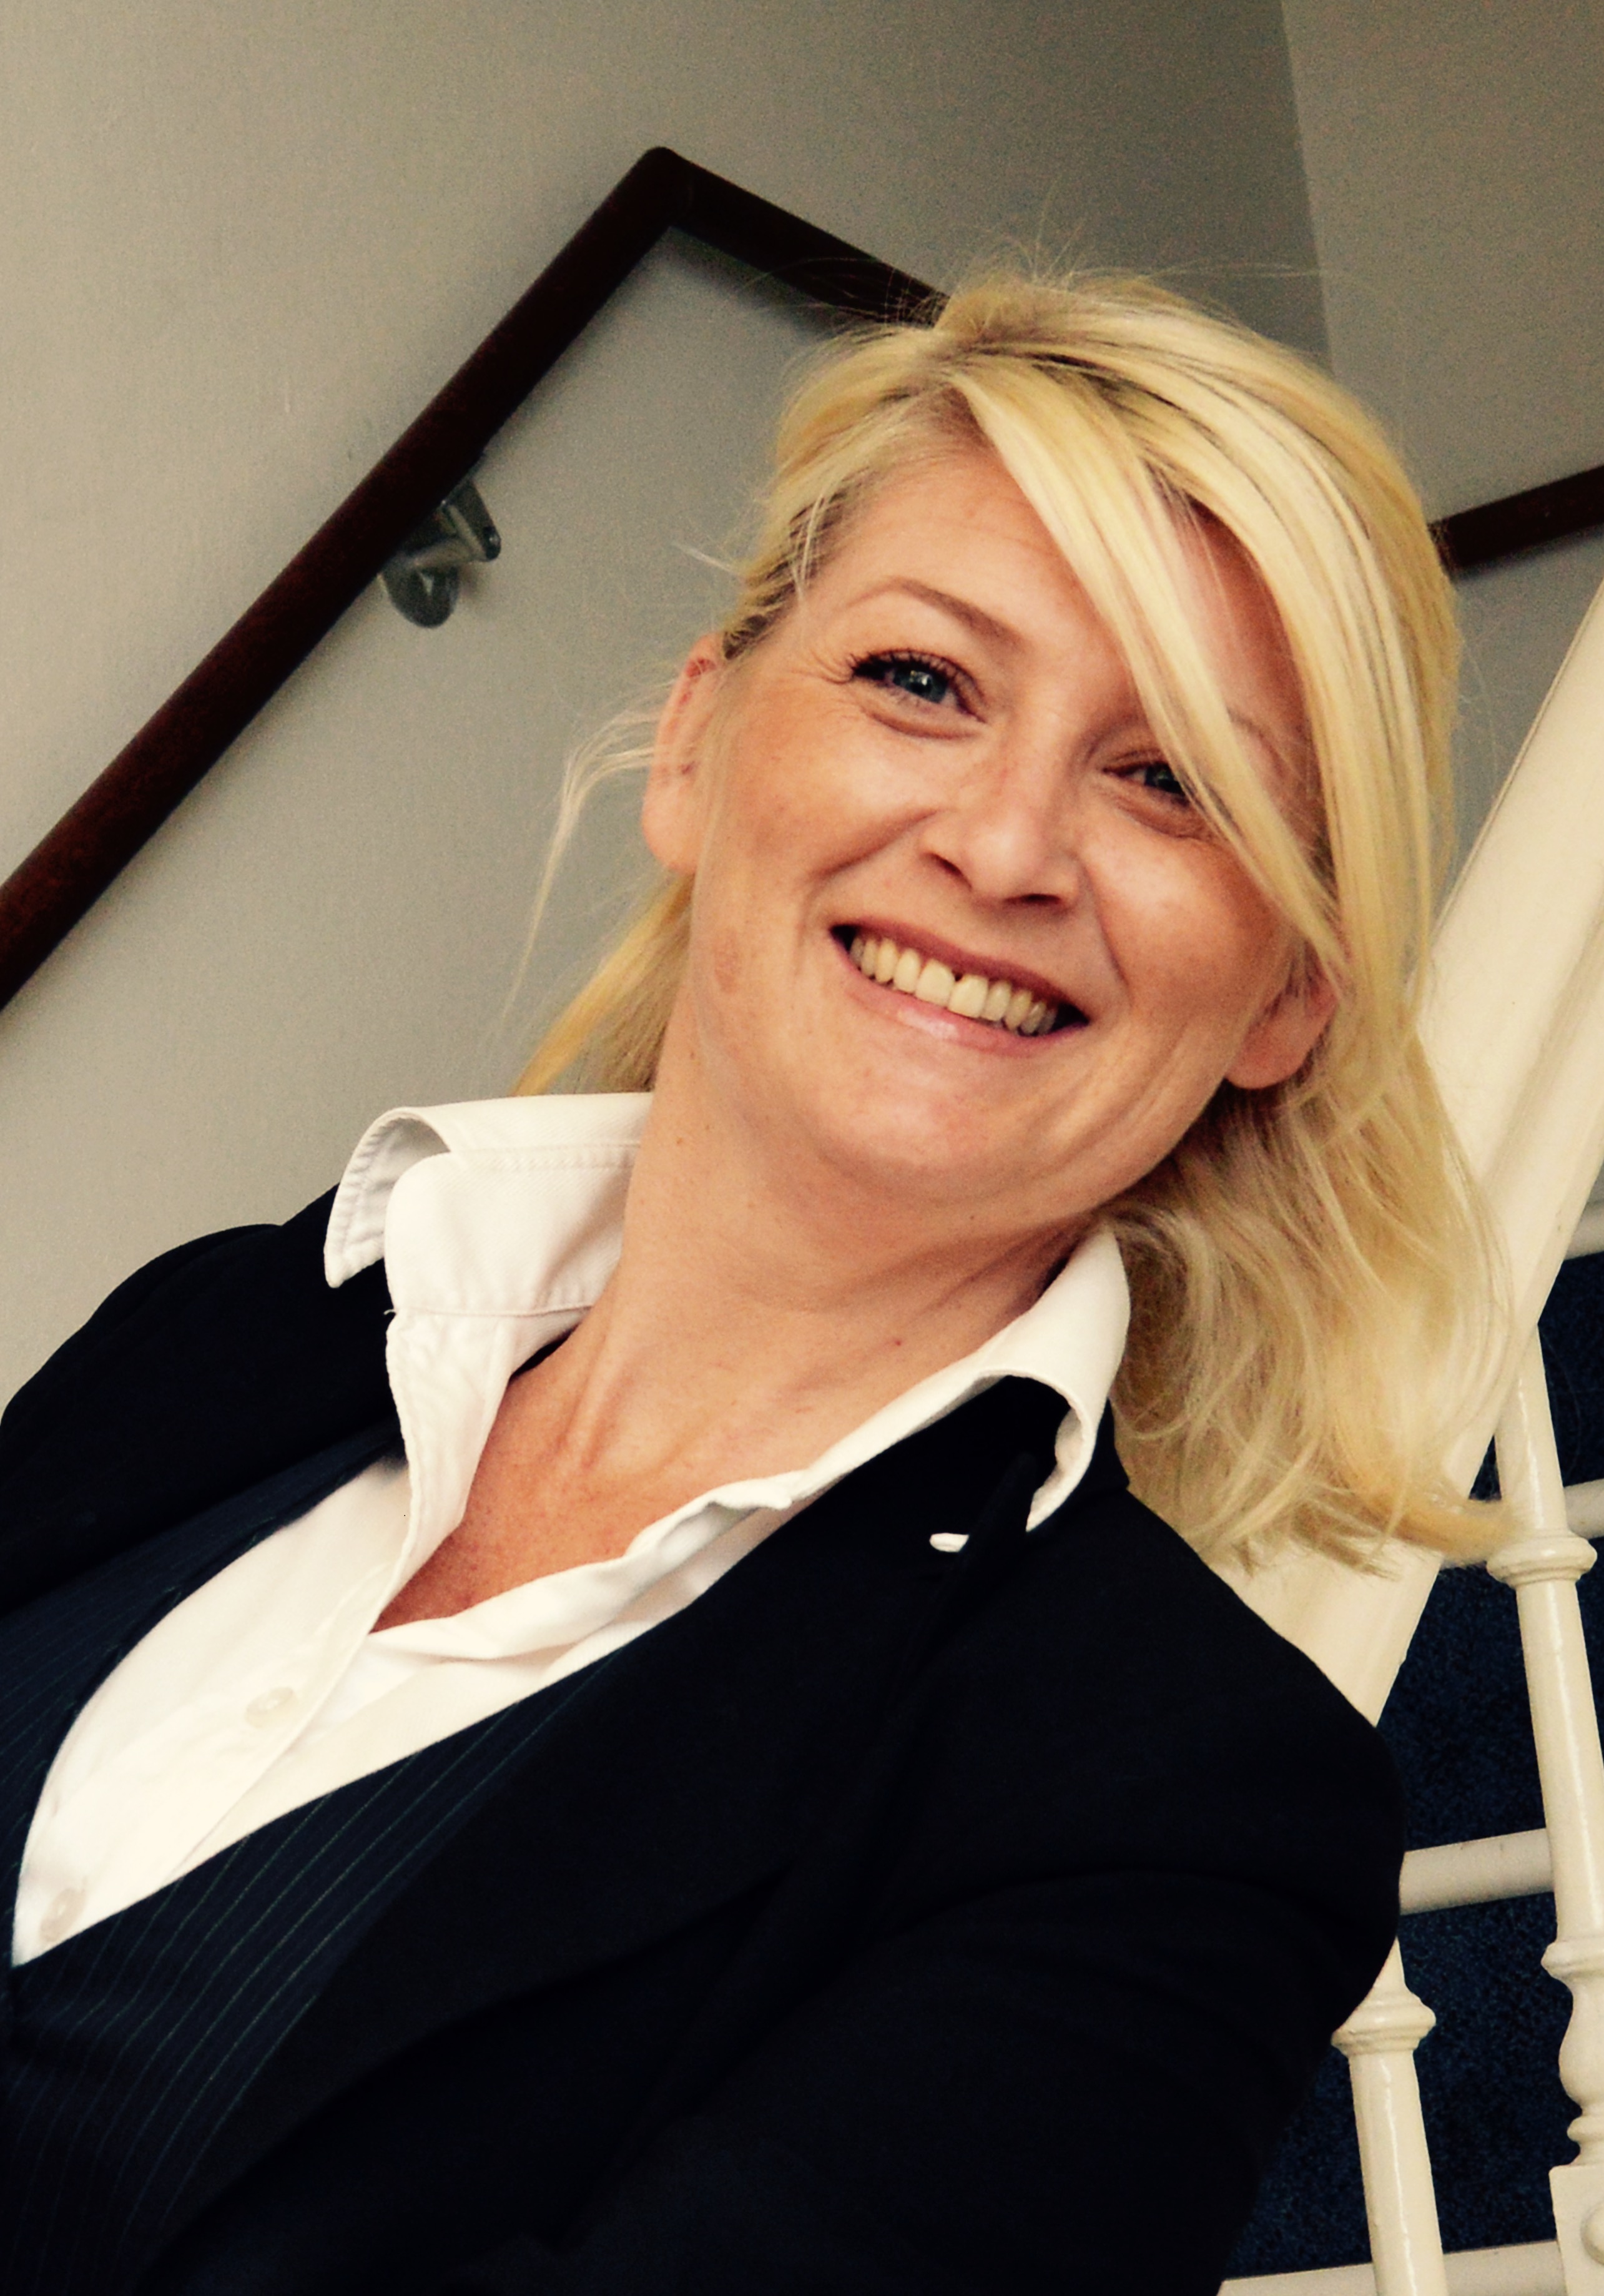 Claudia Duinisveld benoemd tot directeur Ad Hoc Nederland